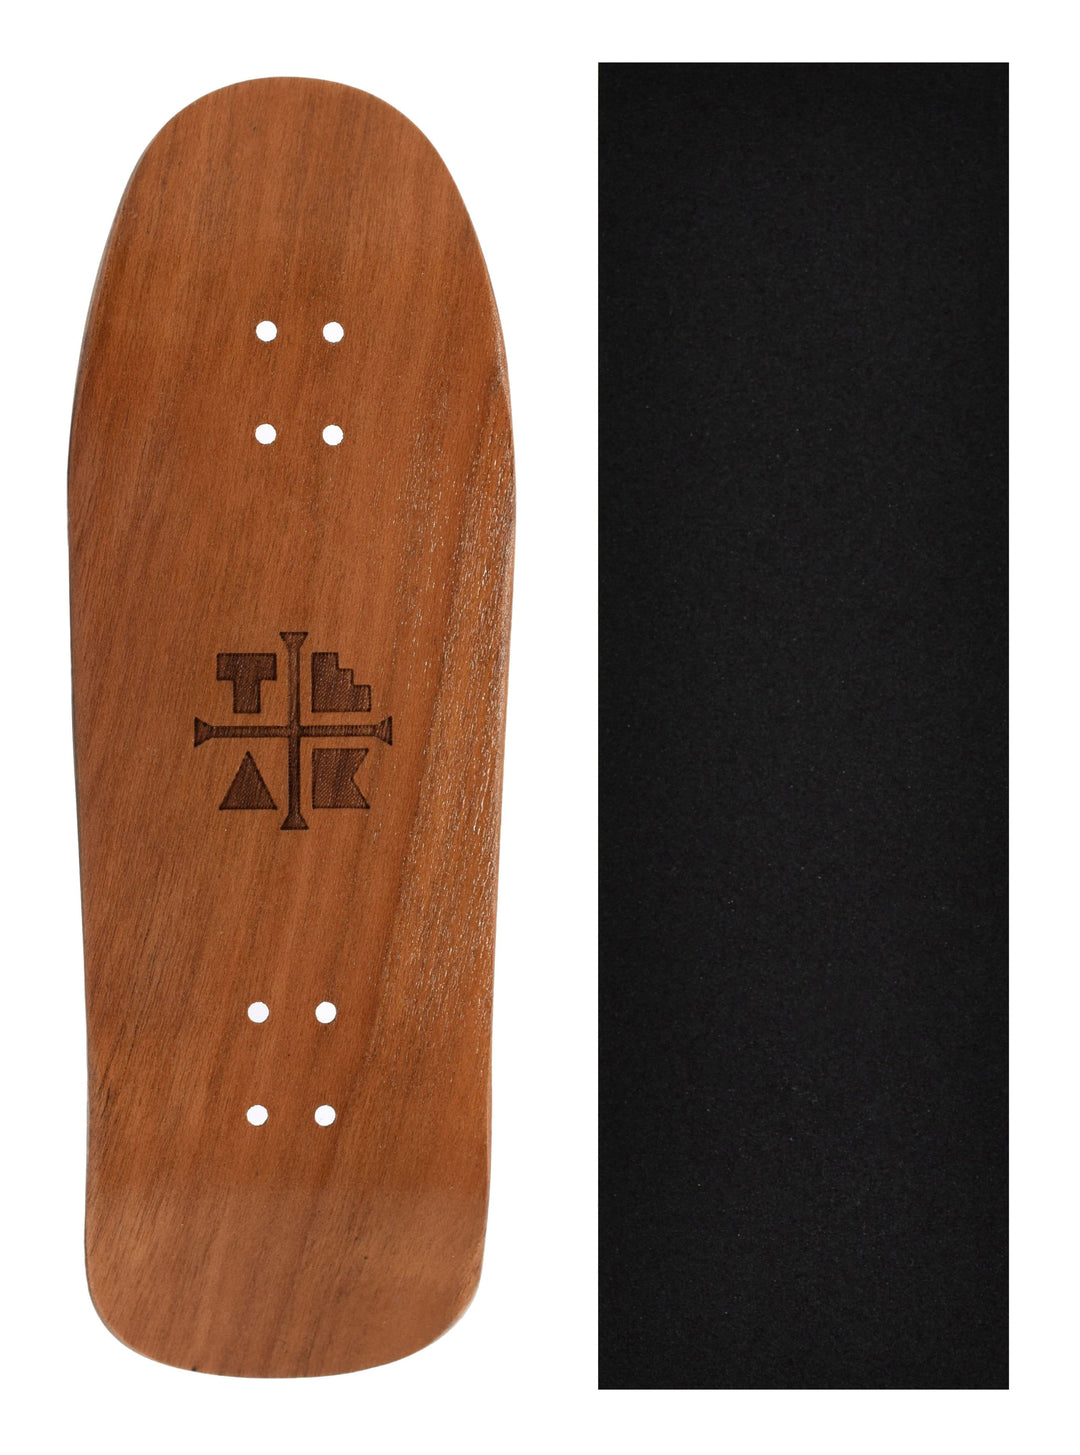 Teak Tuning Carlsbad Cruiser Wooden Fingerboard Deck, "Prunus Serotina" - 34mm x 100mm